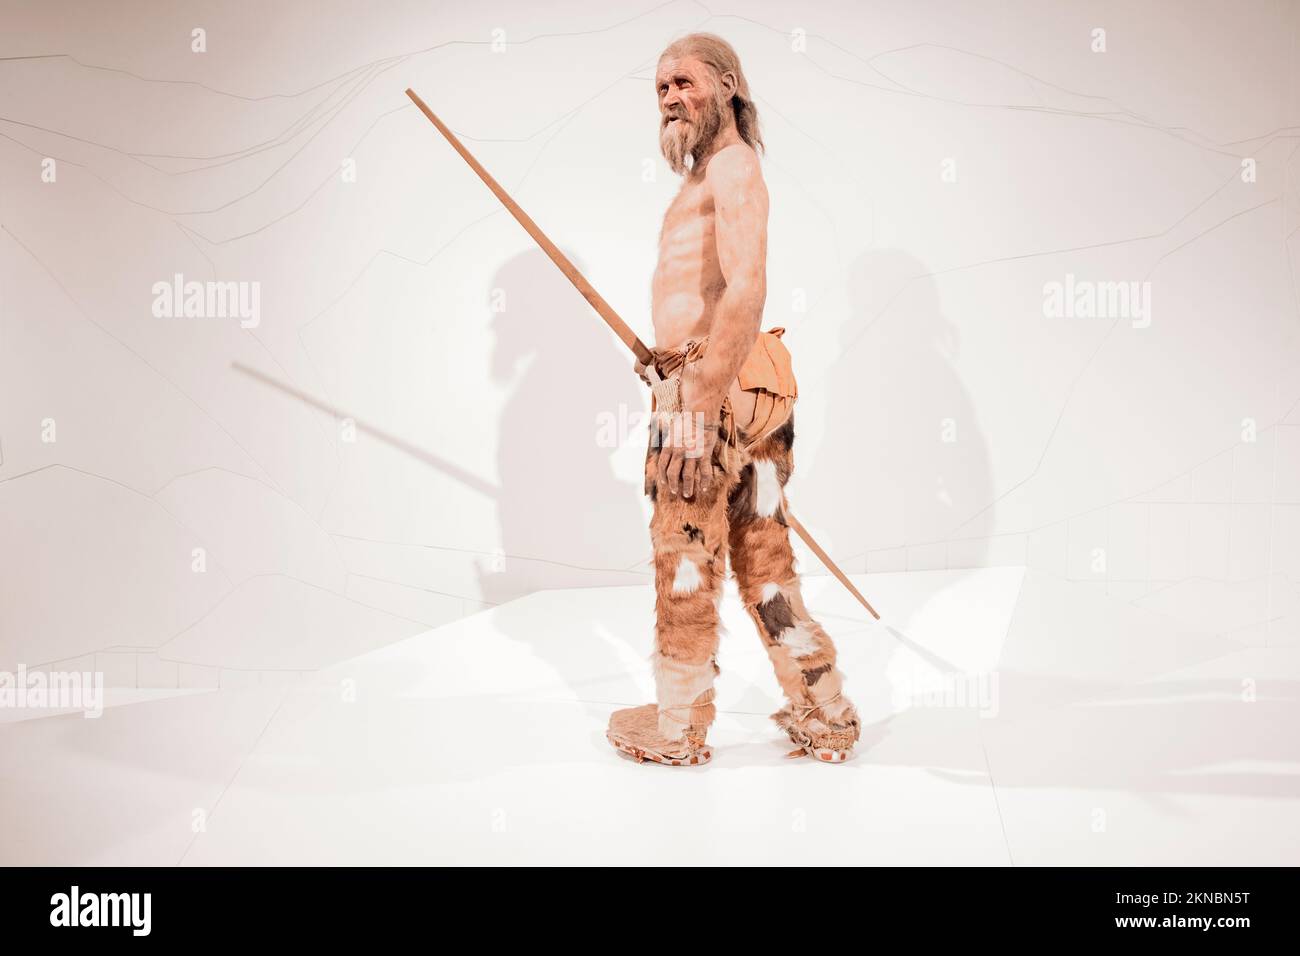 Ötzi, also called the Iceman. Bozen, Italy Stock Photo